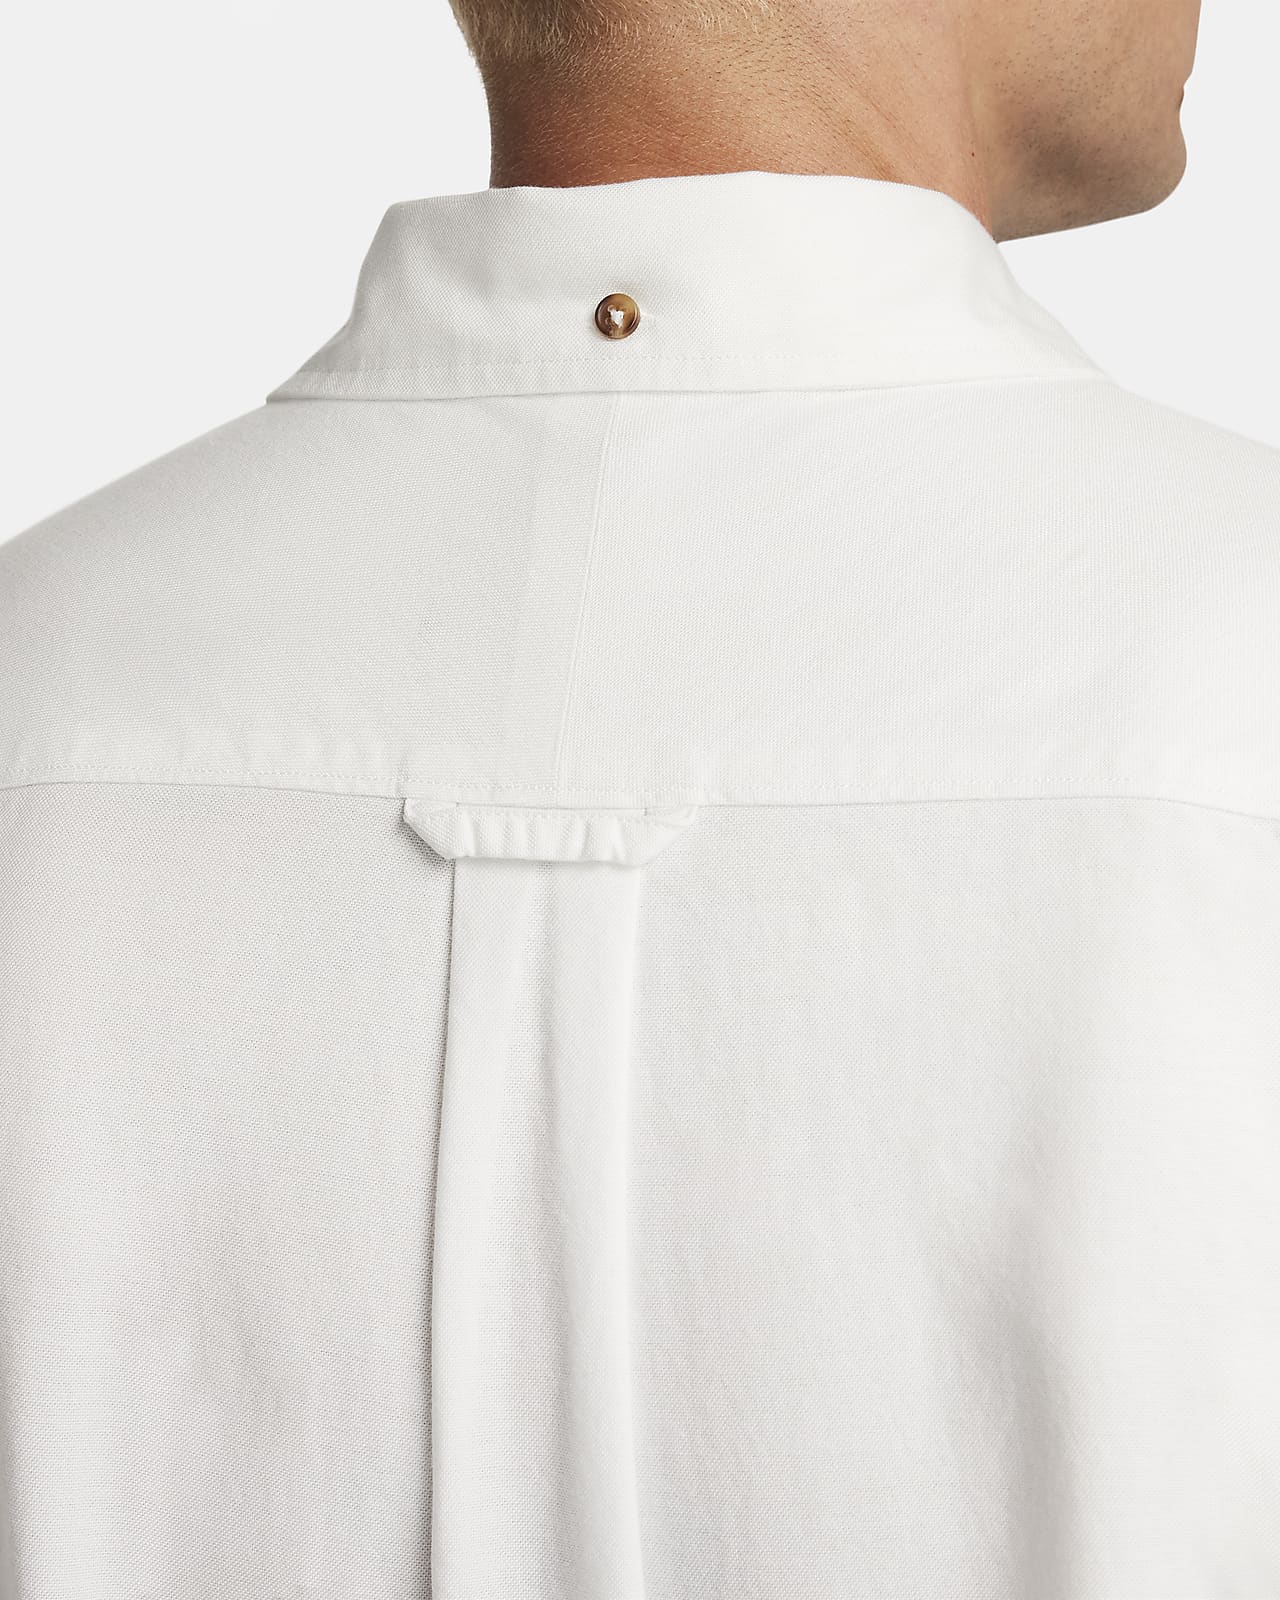 RCP402 - Classic Long Sleeve Oxford Button Down Shirt